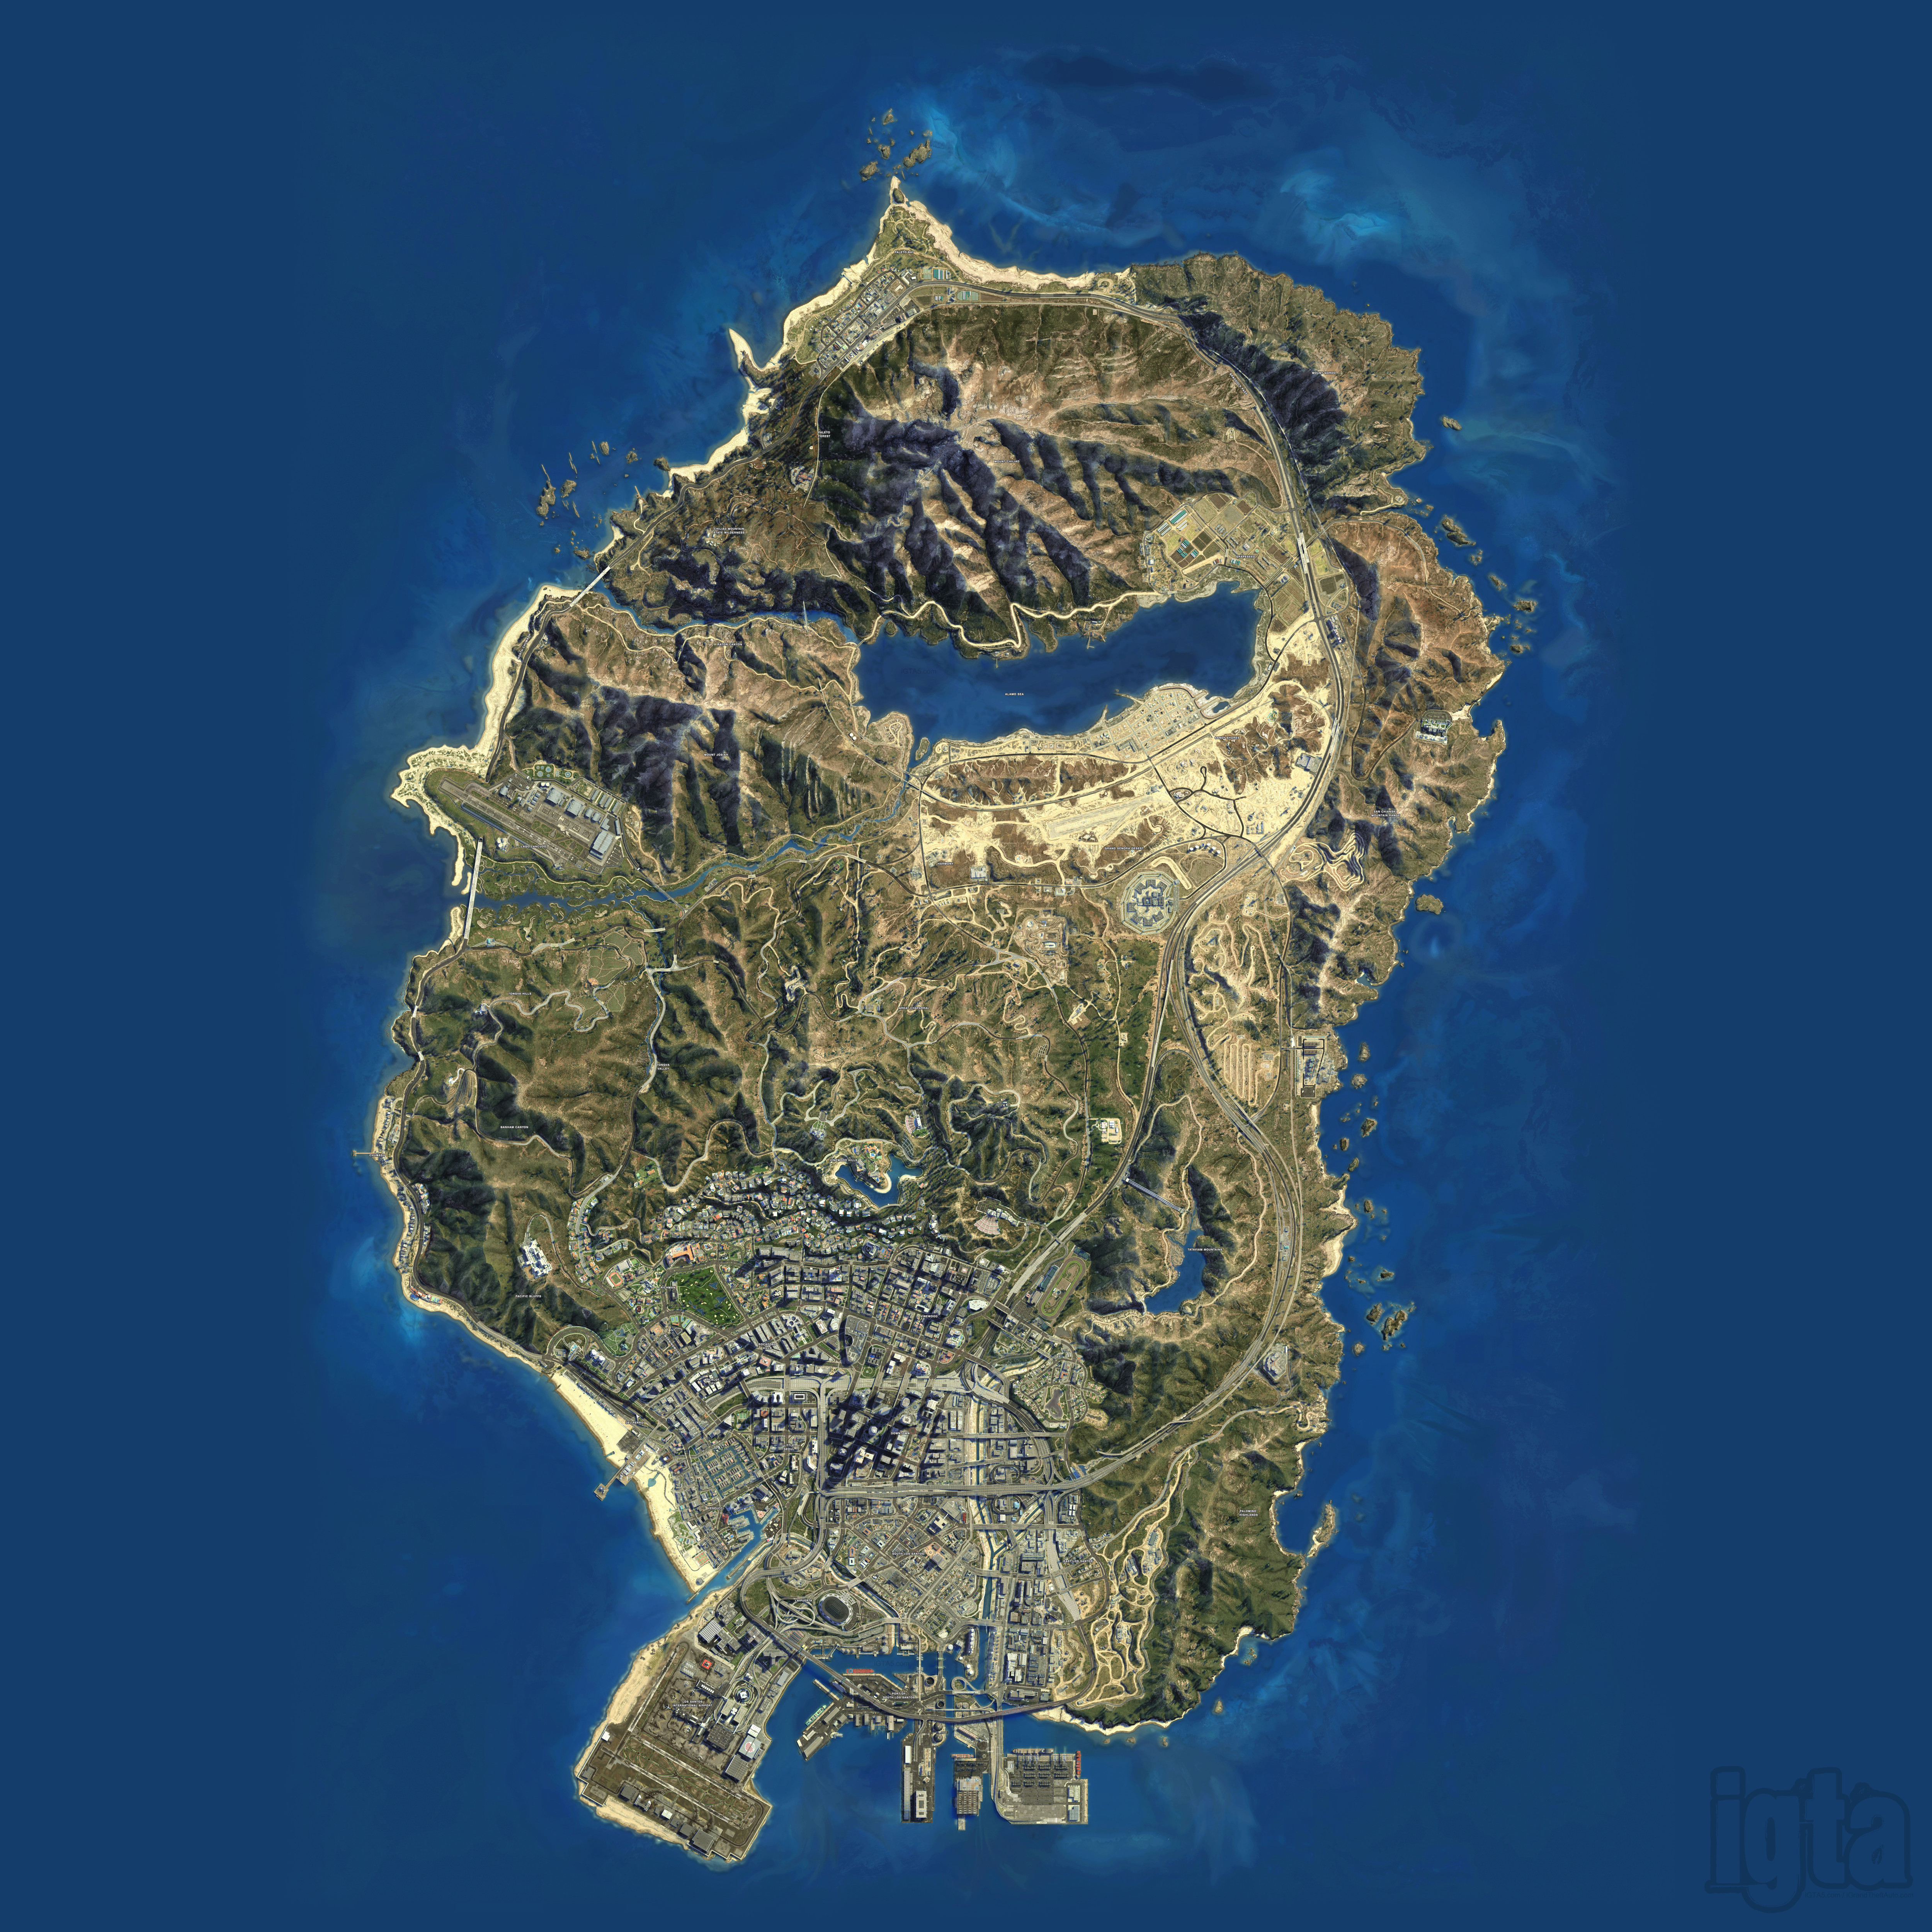 Rockstar Grand Theft Auto GTA 5 City of Los Santos Blaine County Poster Map